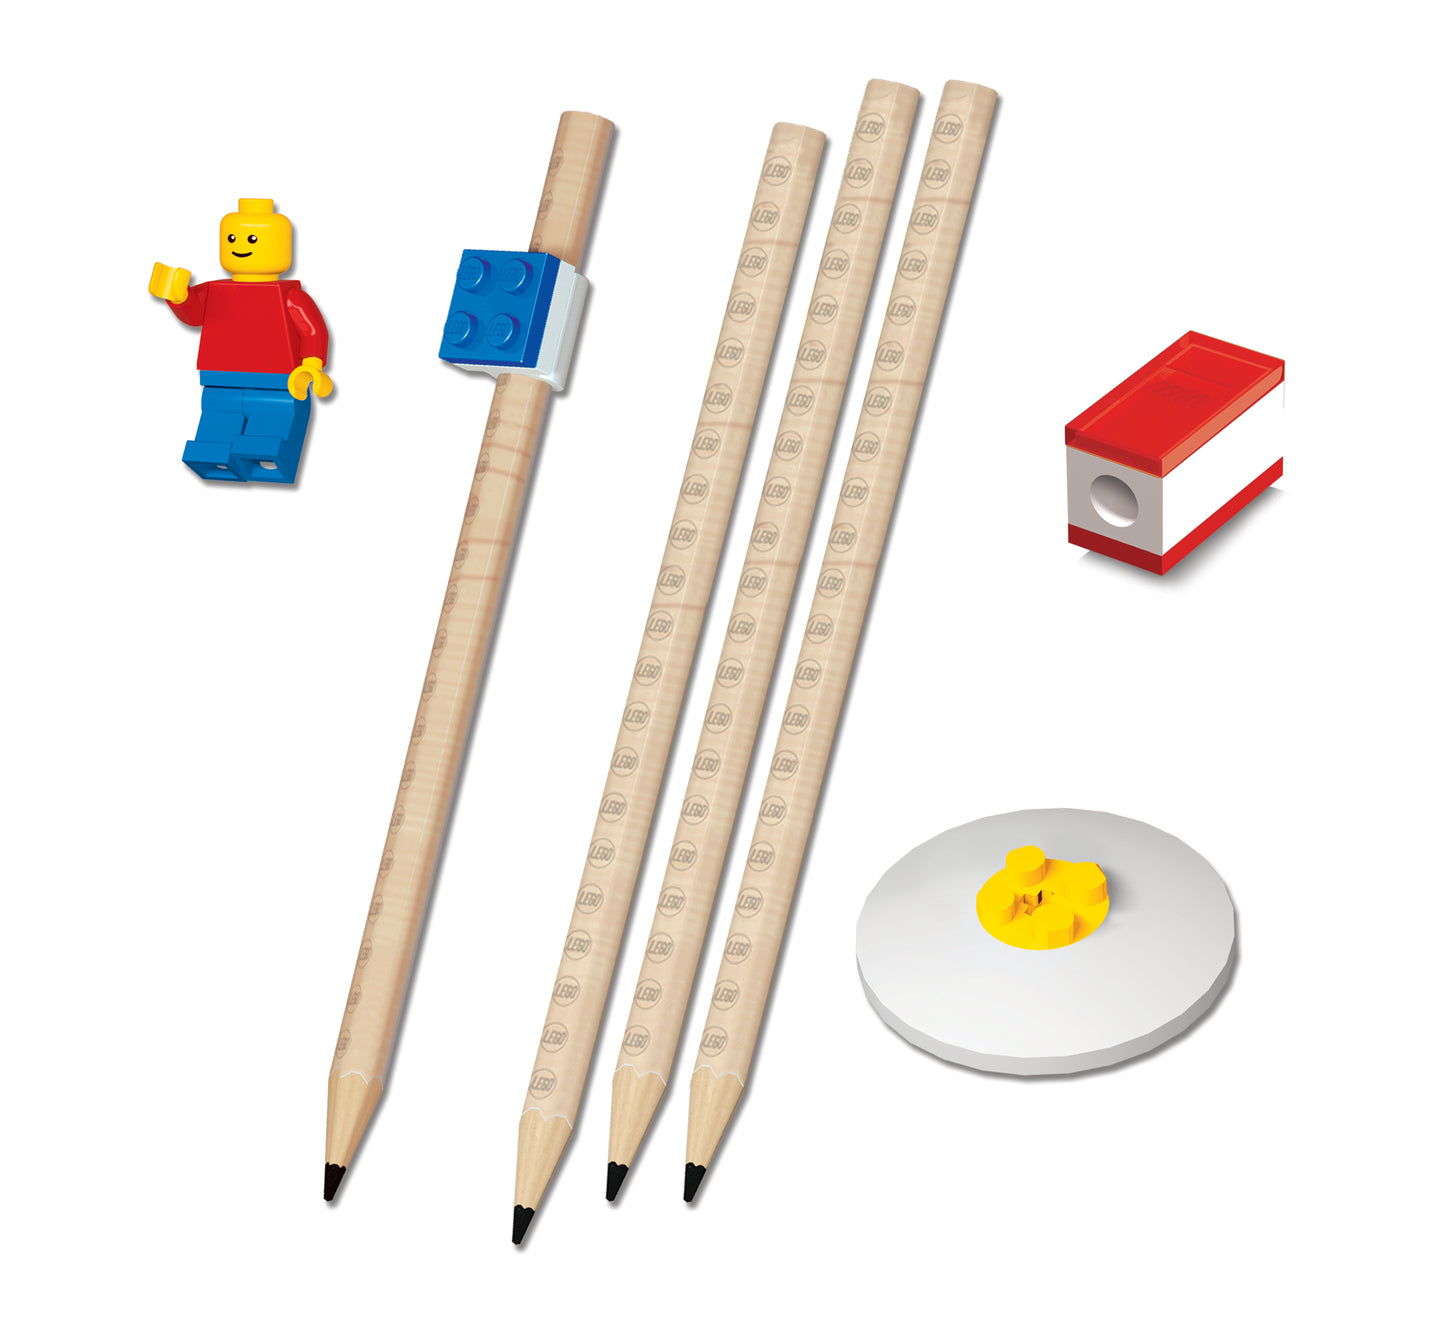 IQ 樂高 2.0文具套裝附公仔, 鉛筆, 削鉛筆器, 筆套, 橡皮擦 (52053)